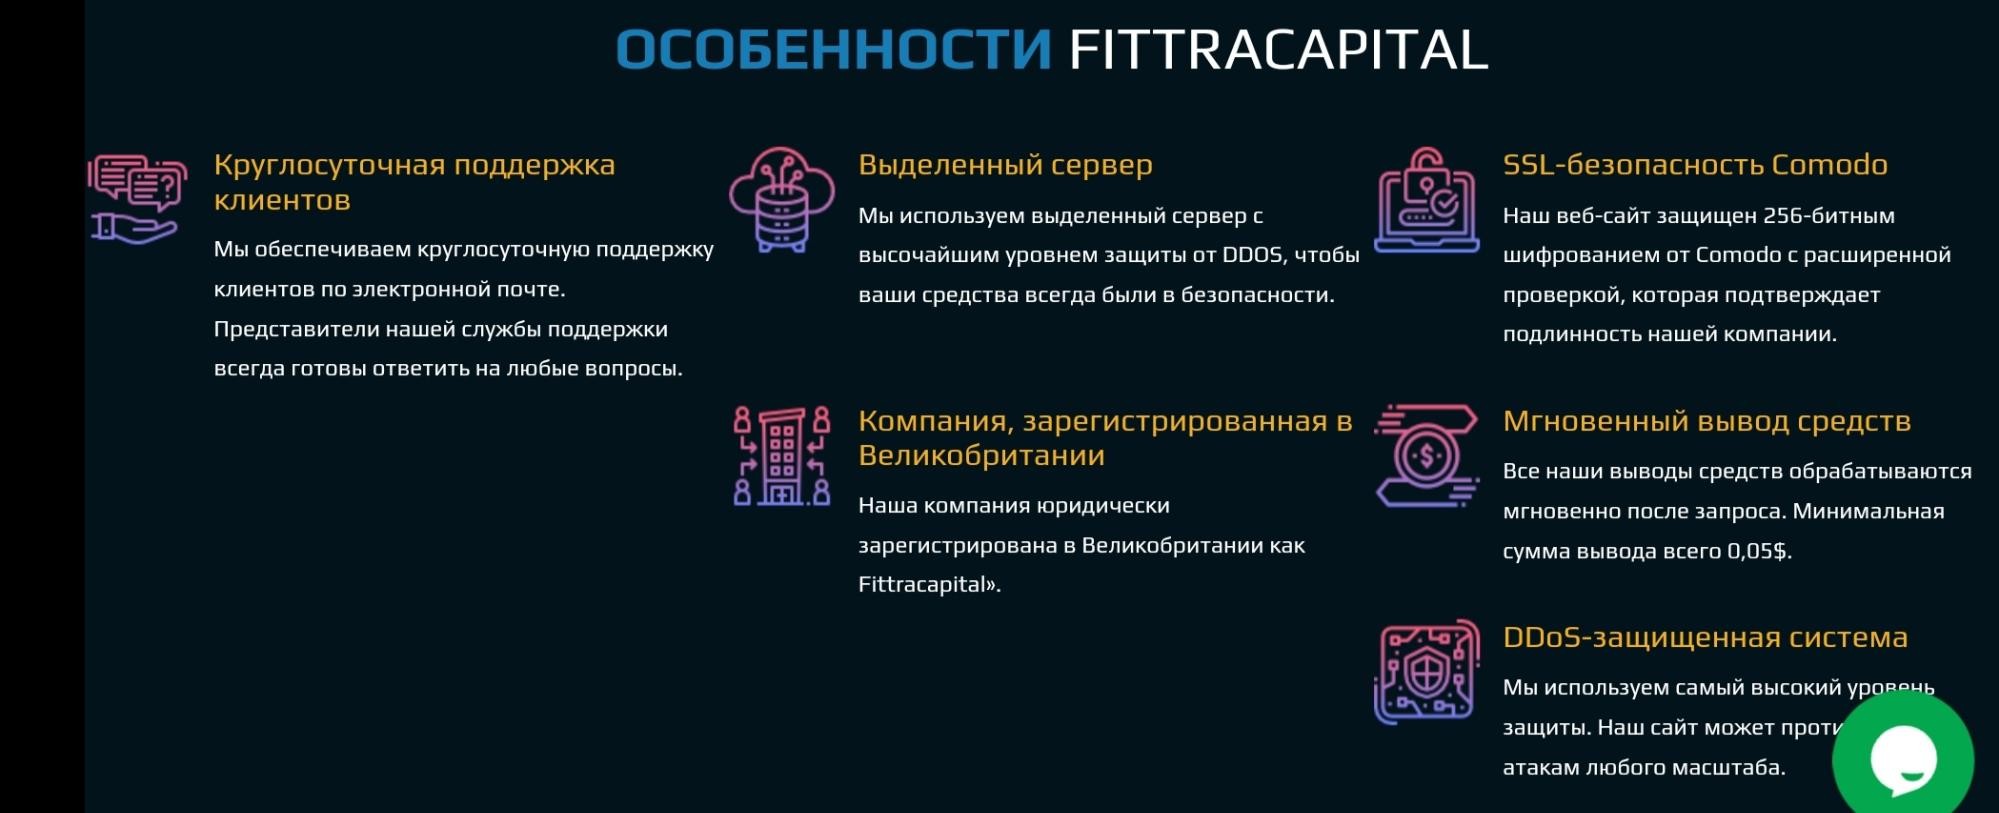 Fittracapital сайт особенности компании